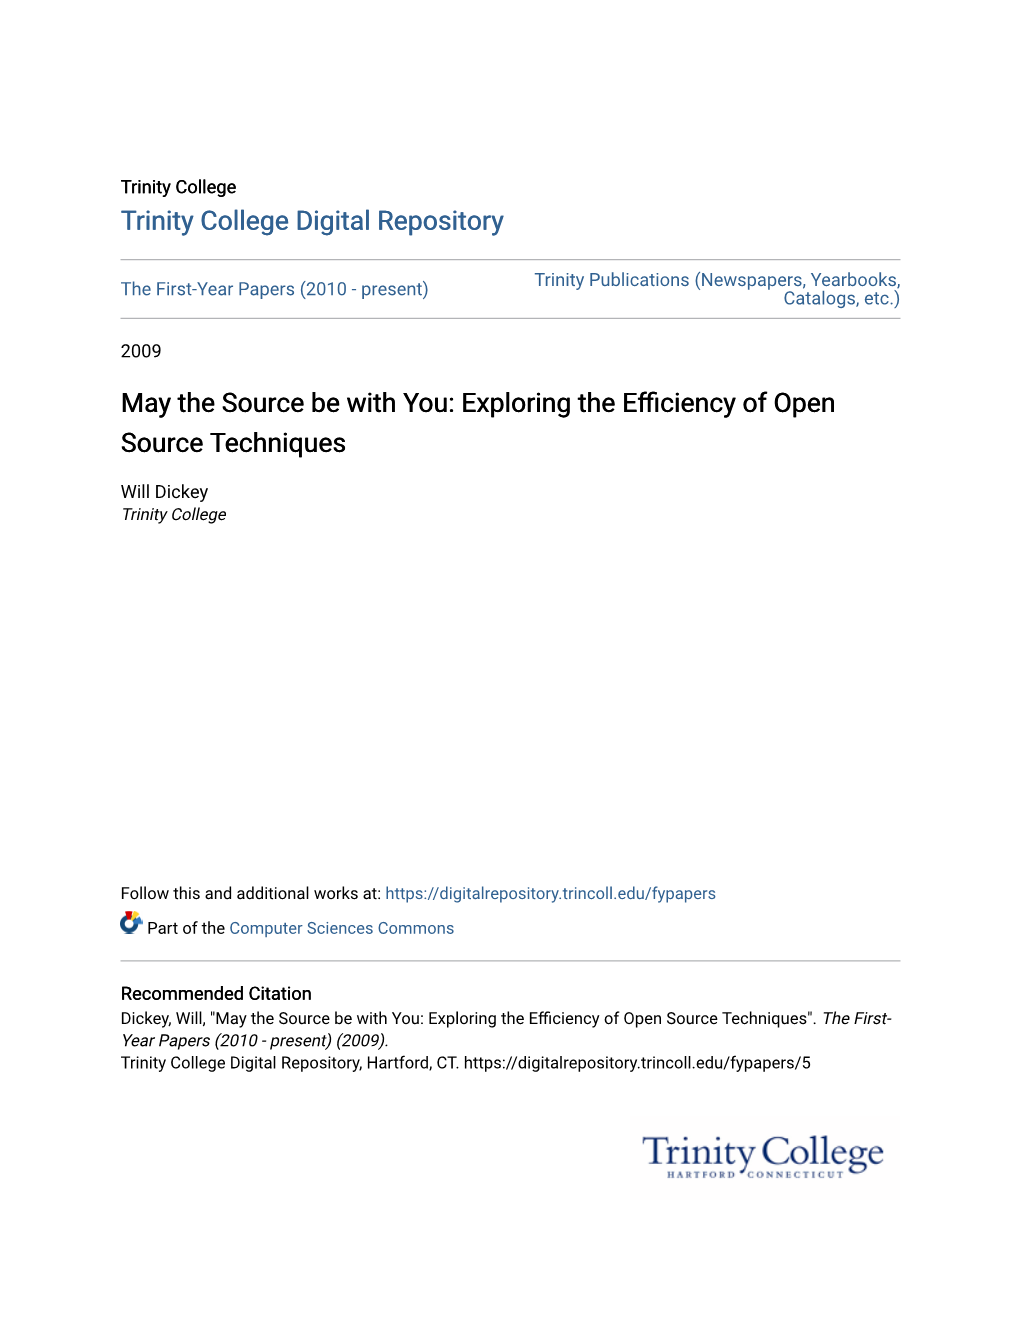 Exploring the Efficiency of Open Source Techniques